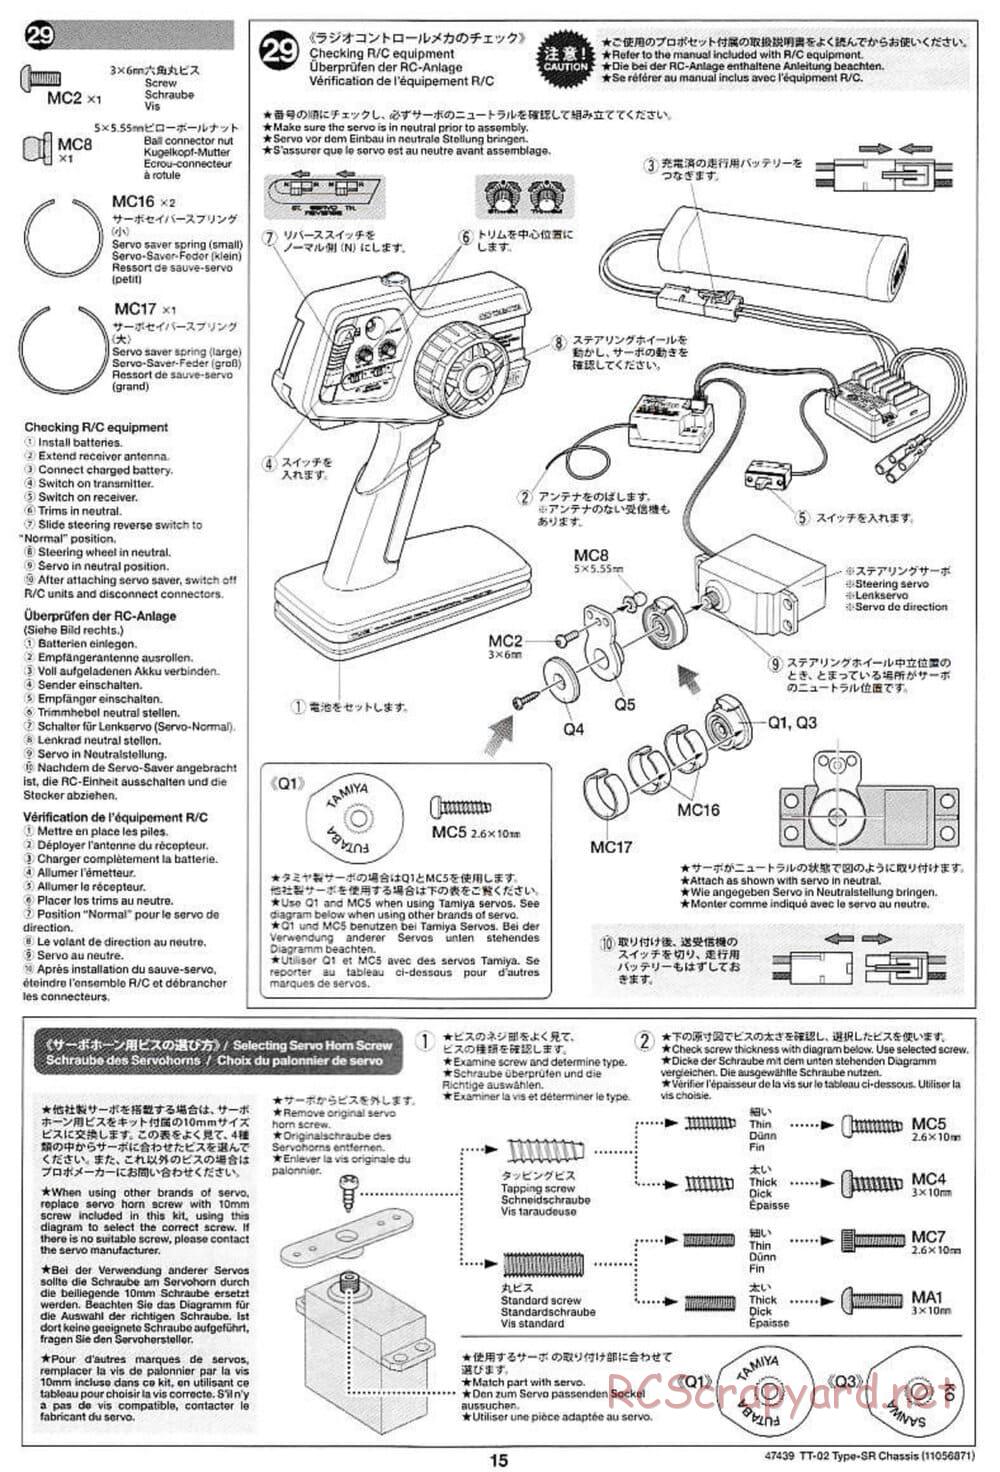 Tamiya - TT-02 Type-SR Chassis - Manual - Page 15